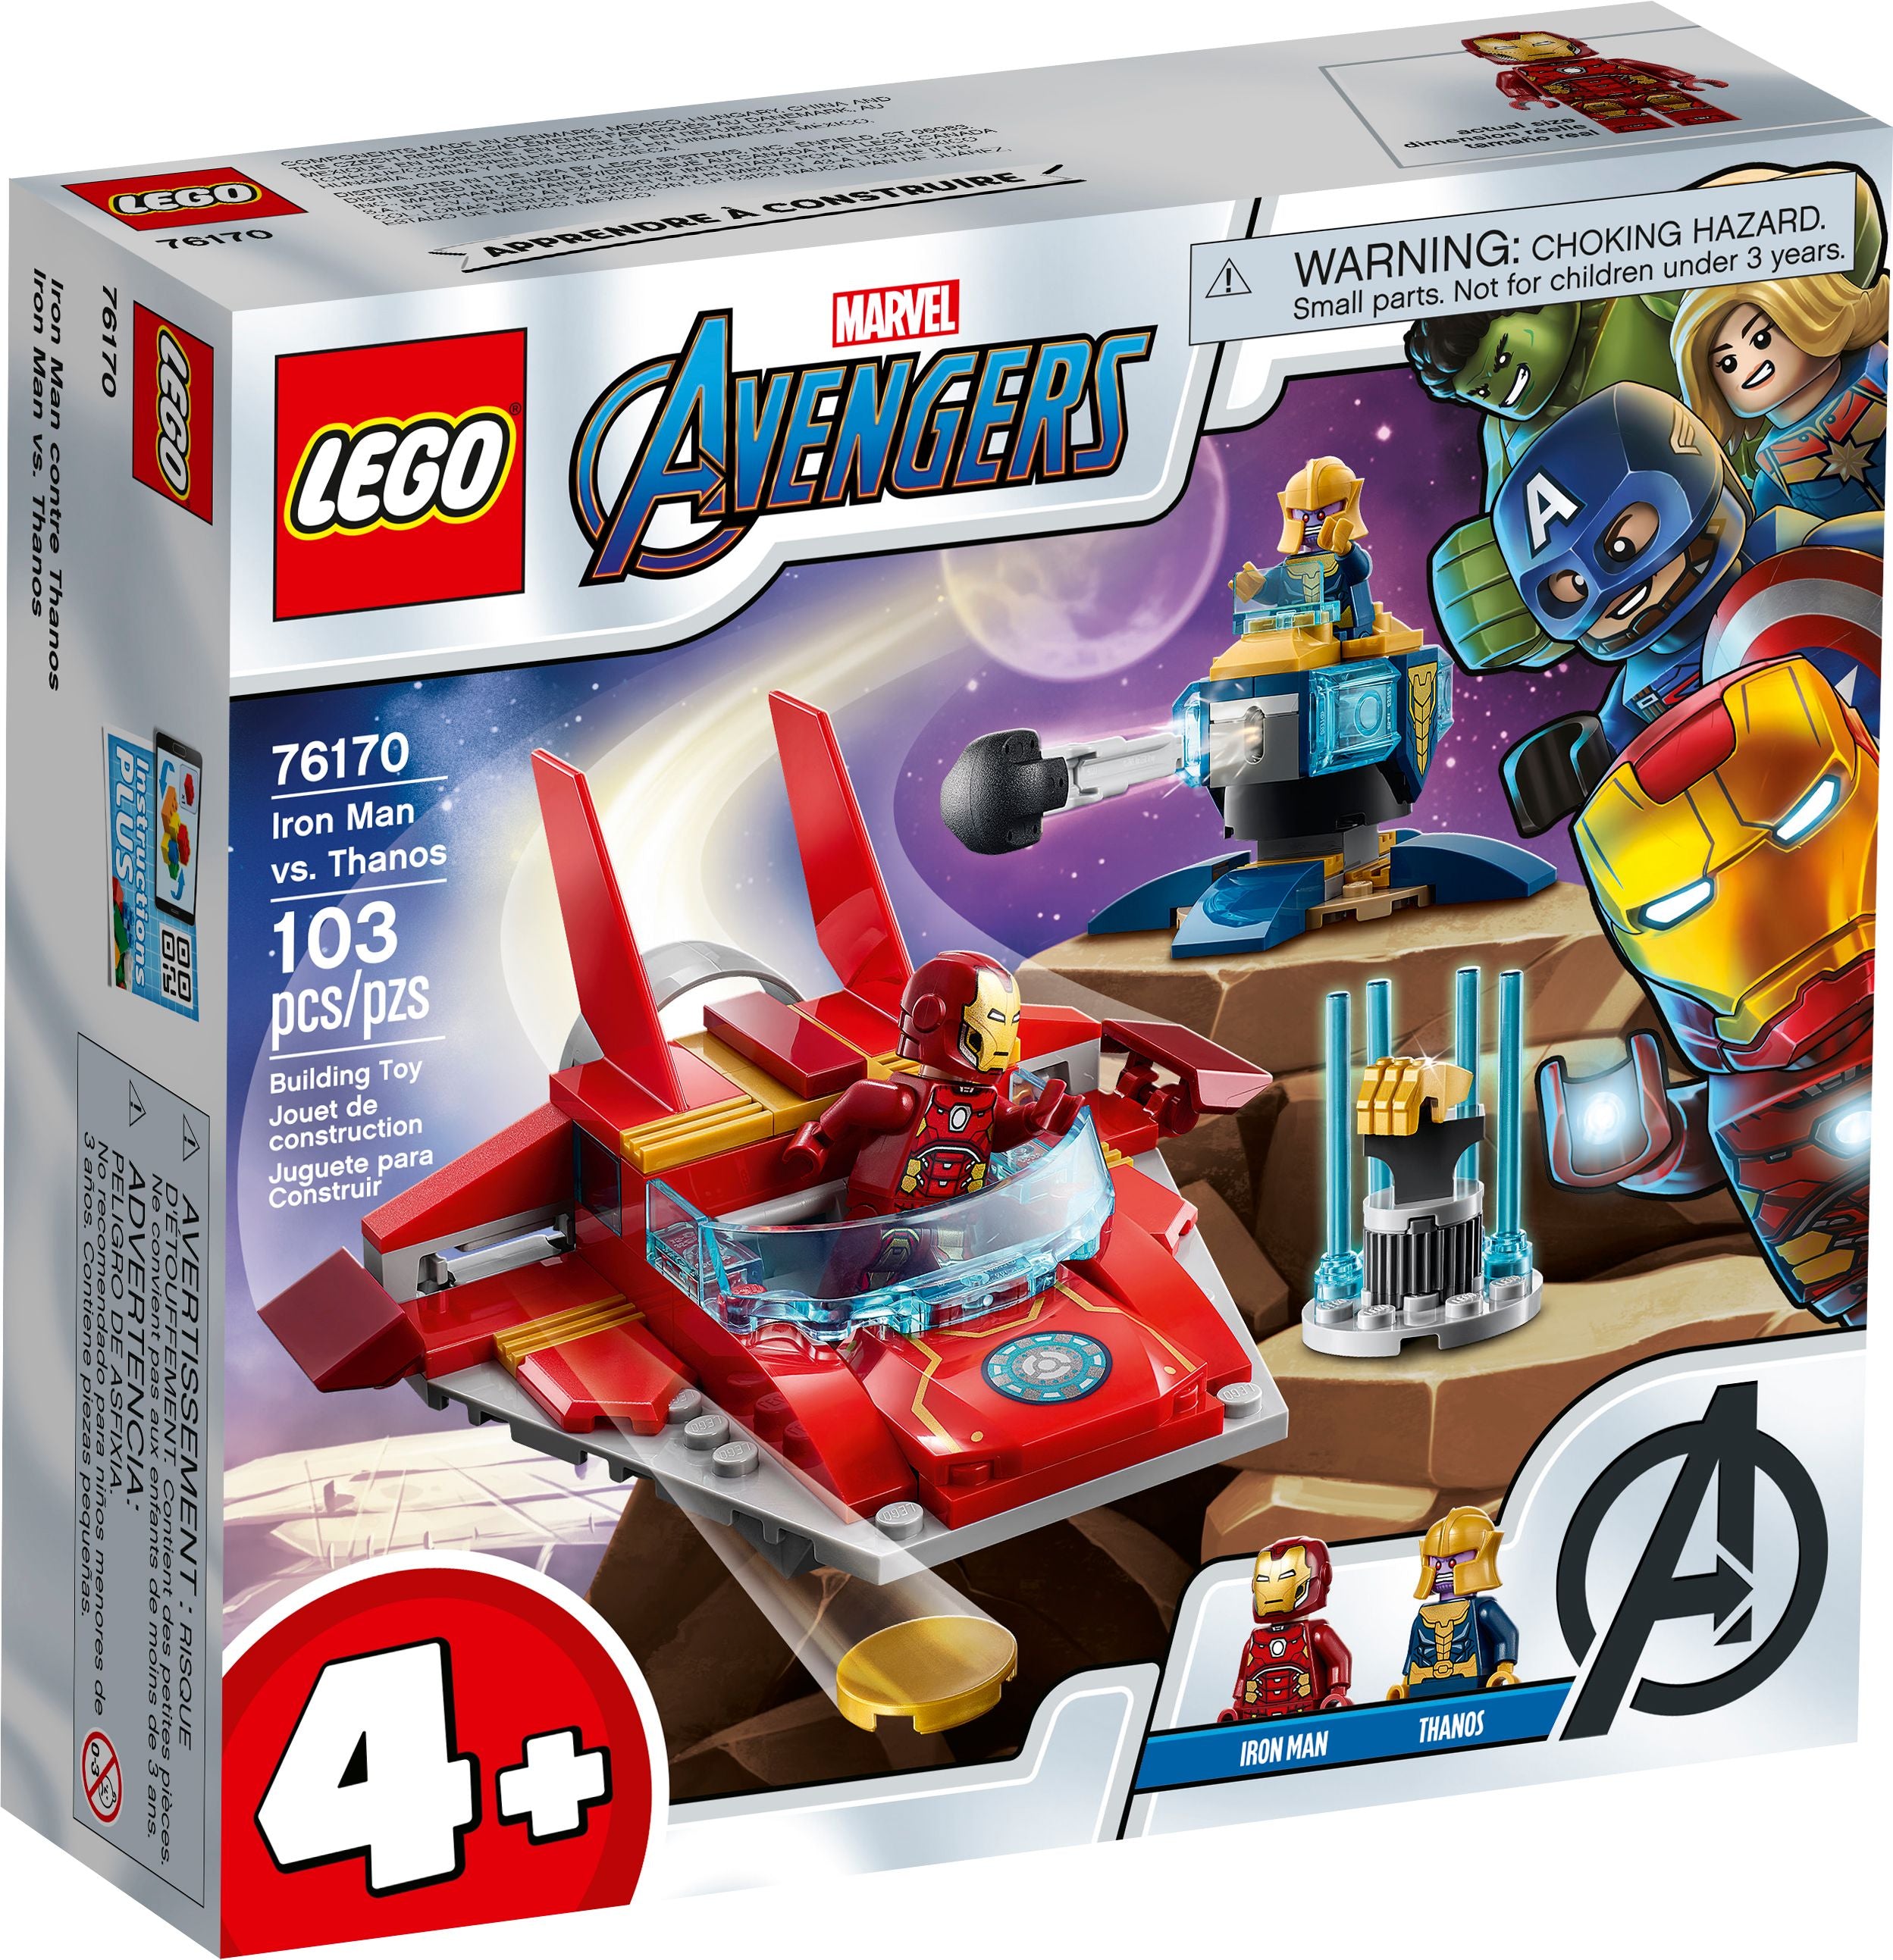 LEGO: Super Heroes - Iron Man vs. Thanos